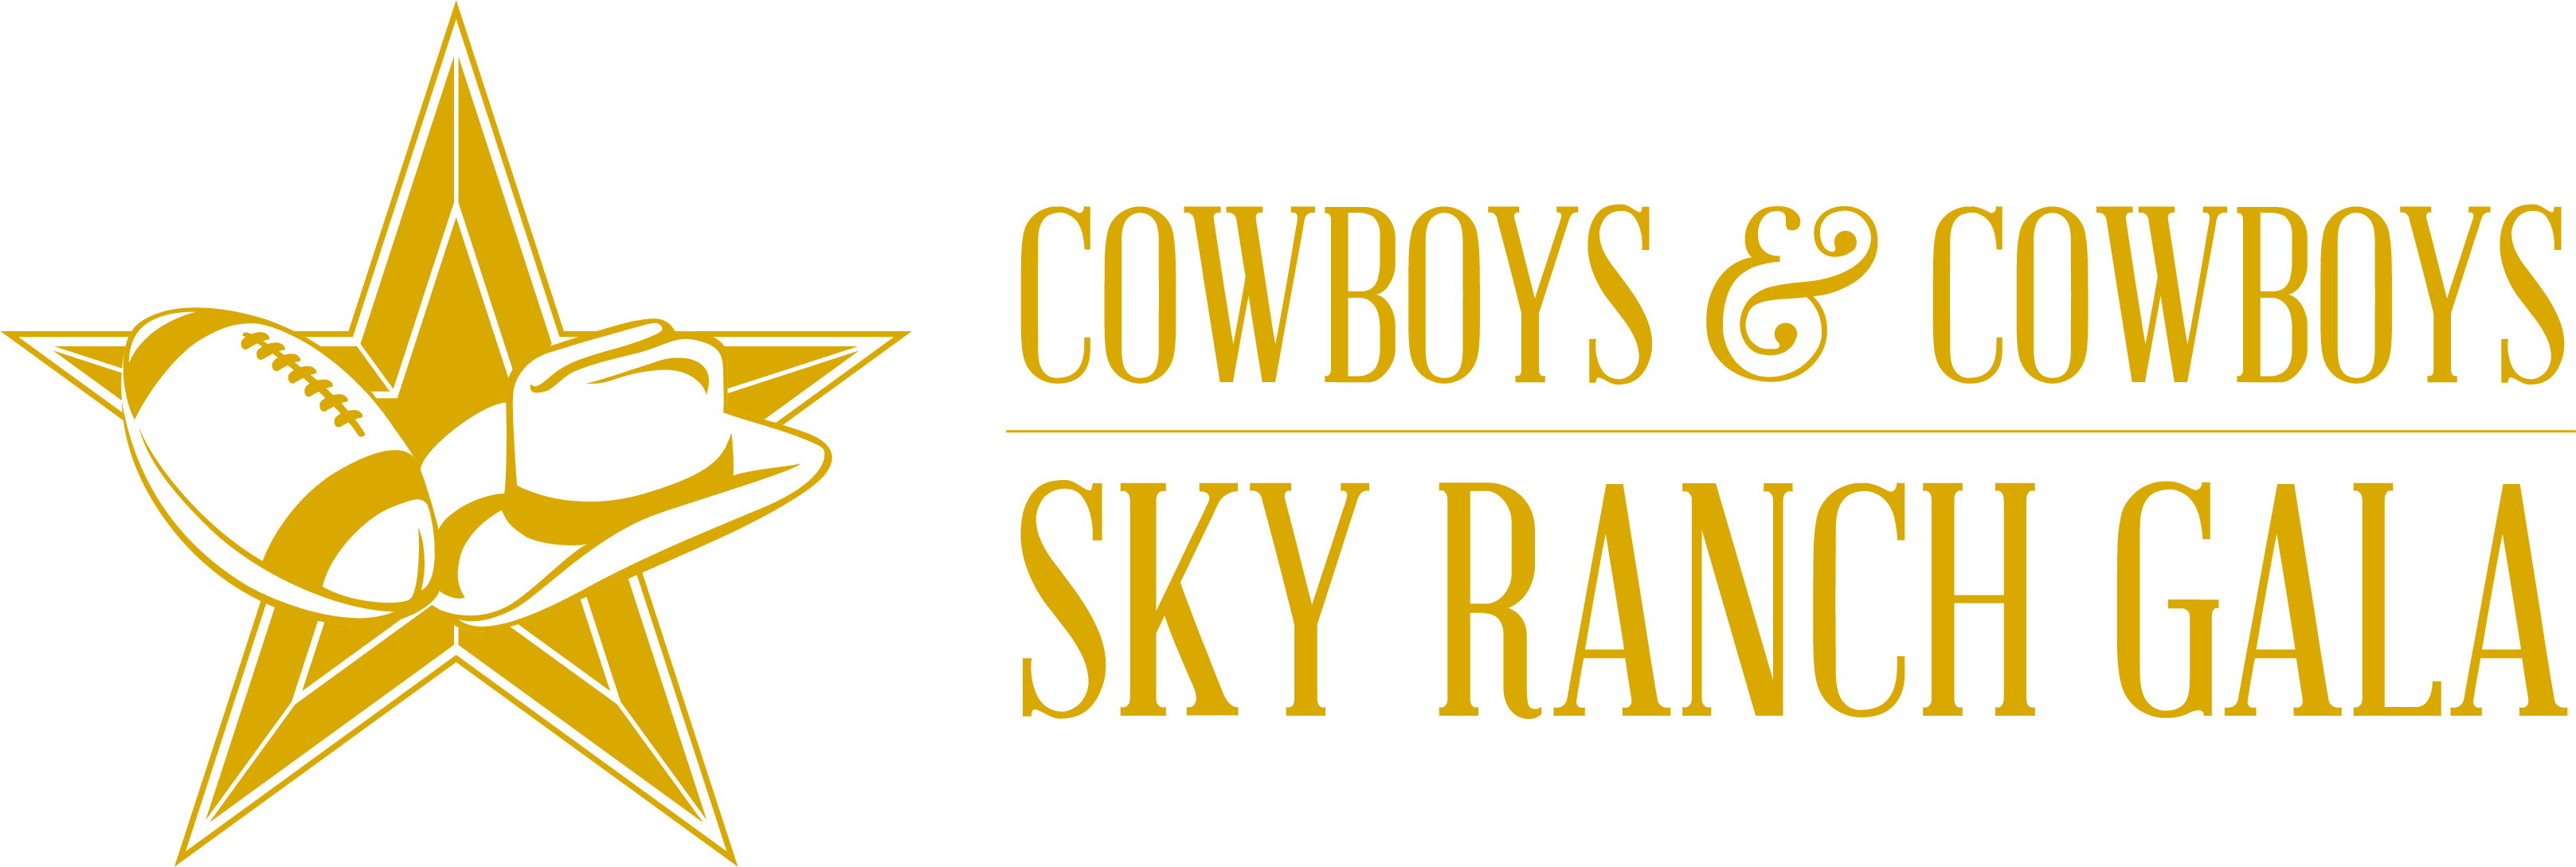 Cowboys & Cowboys